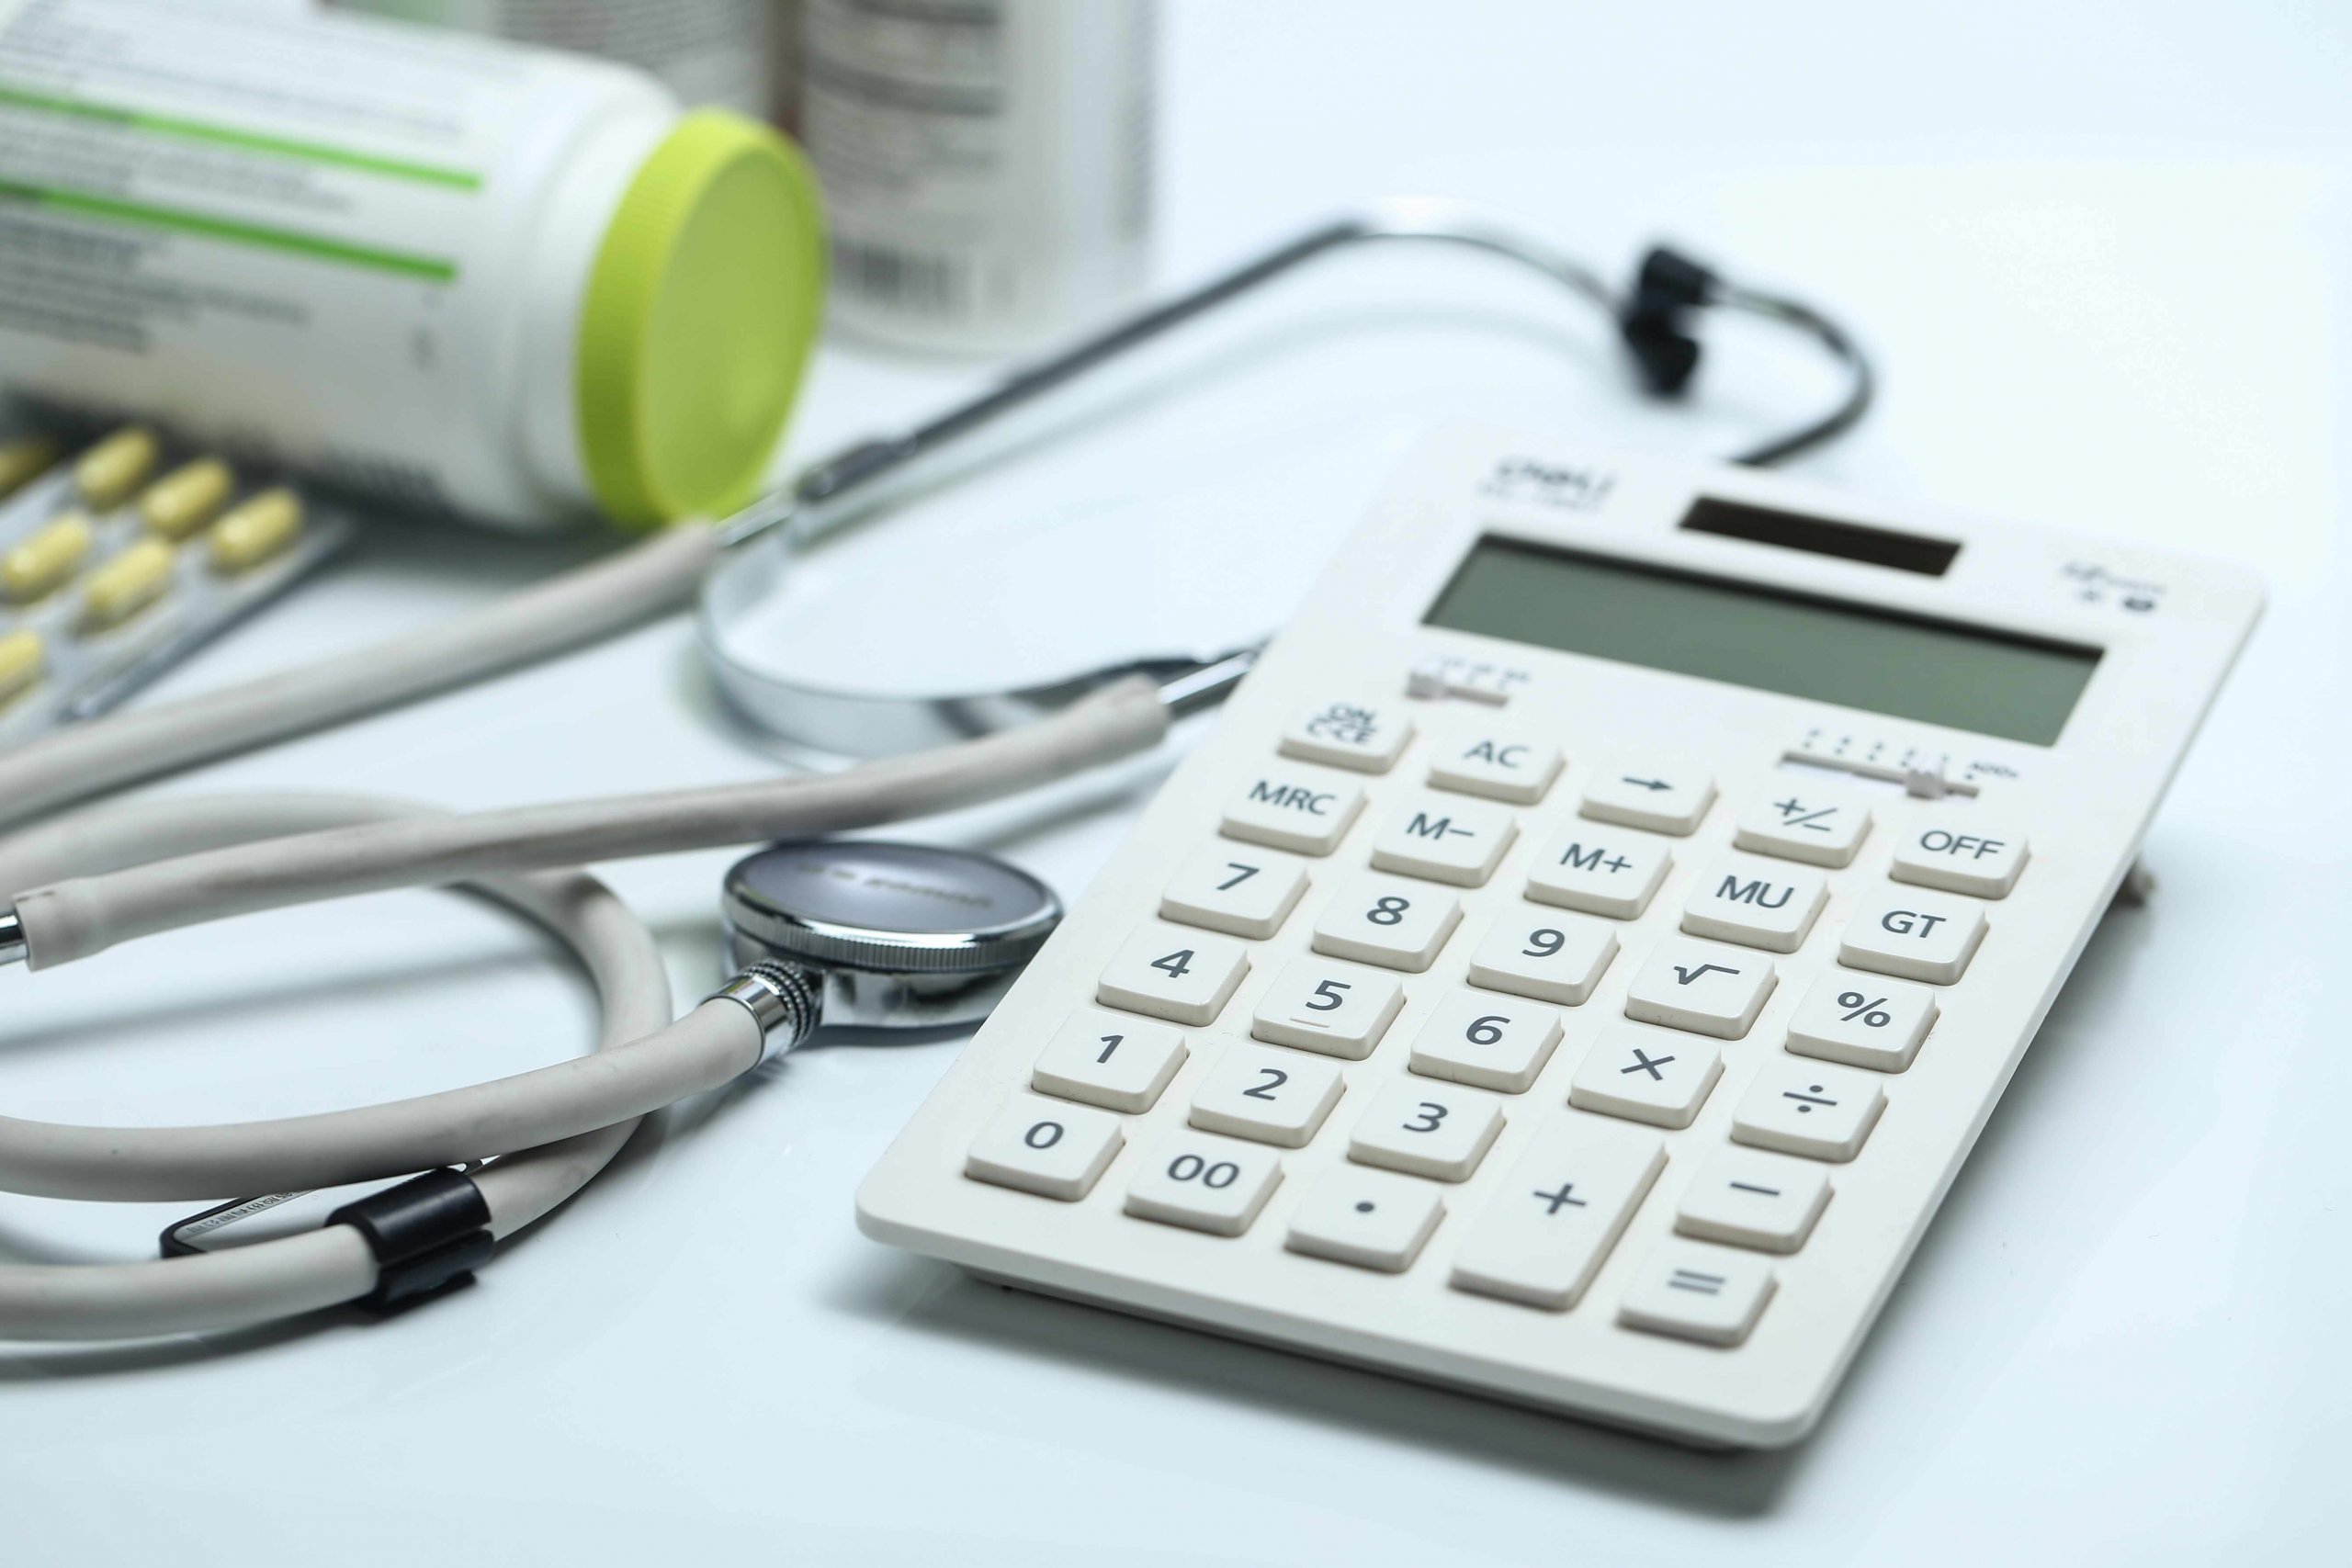 medical billing and management services